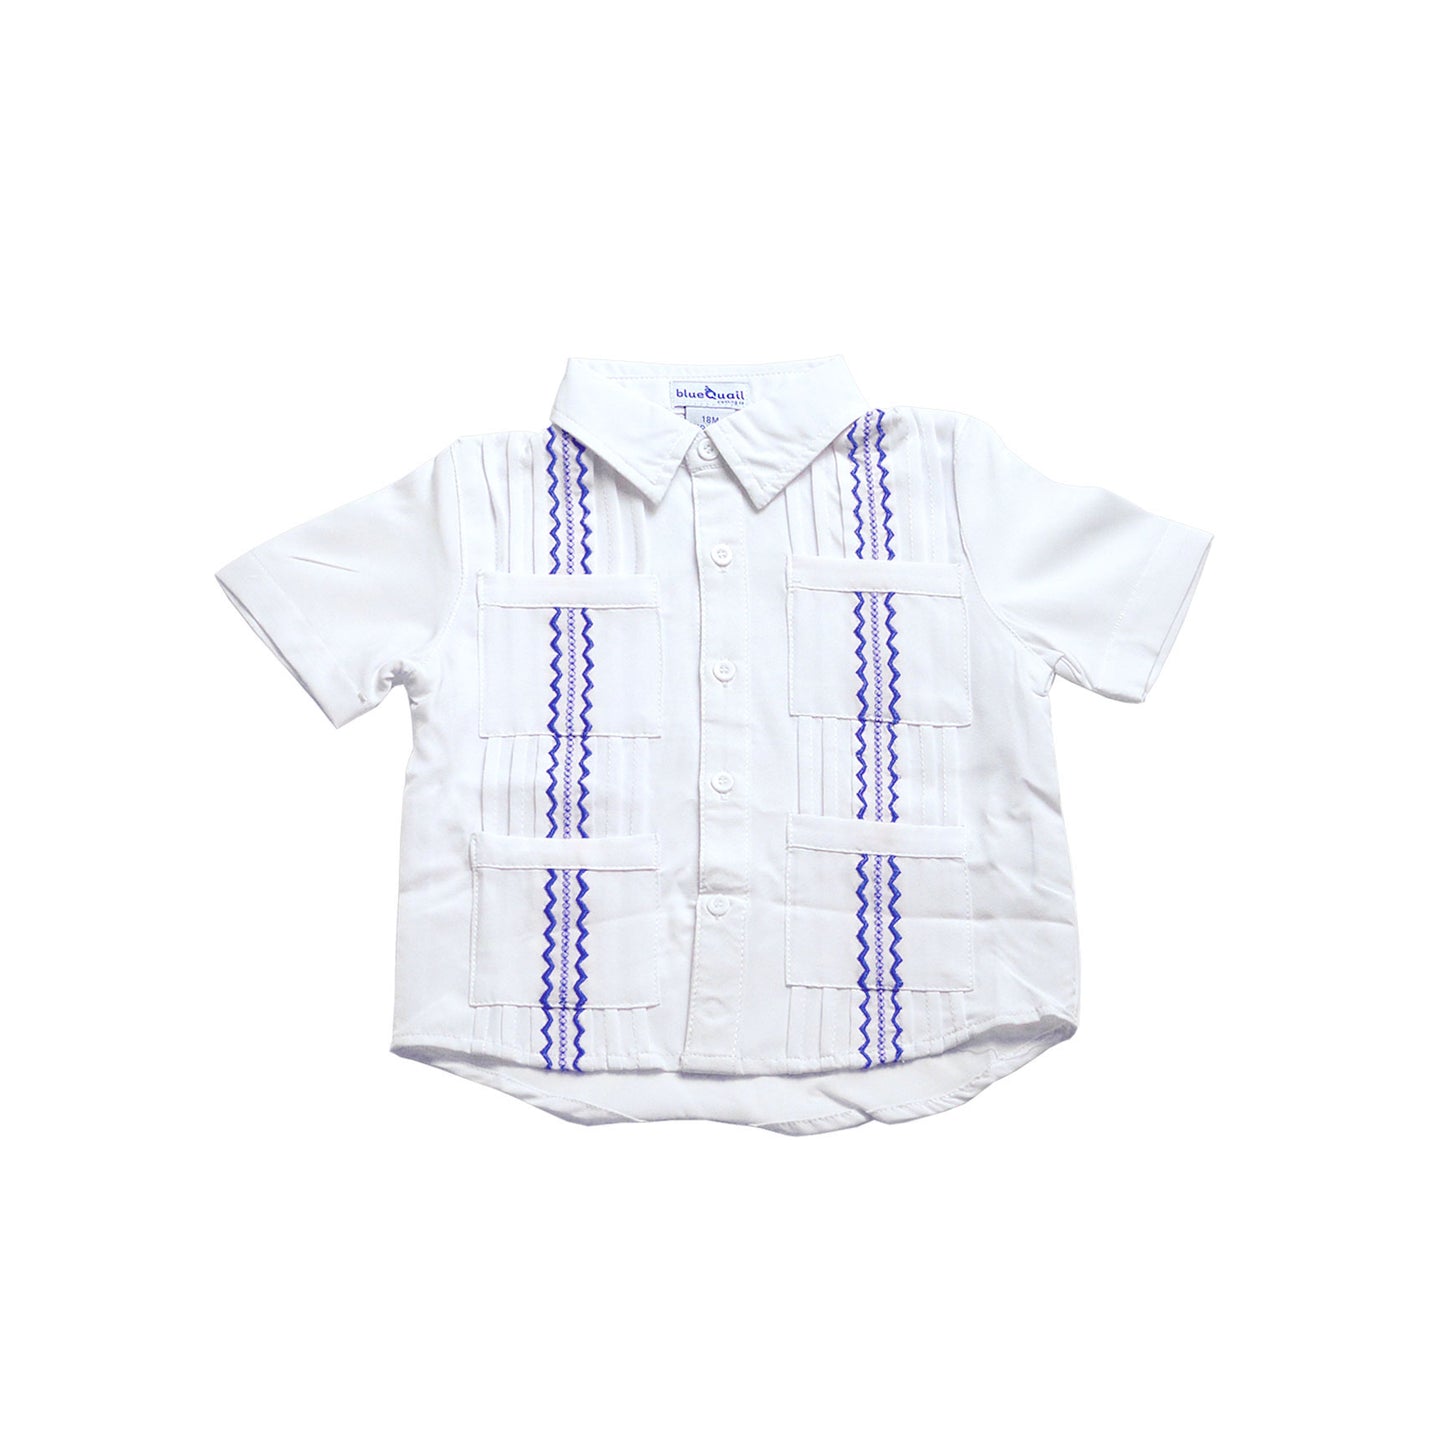 Guayabera – White & Navy Short Sleeve Shirt